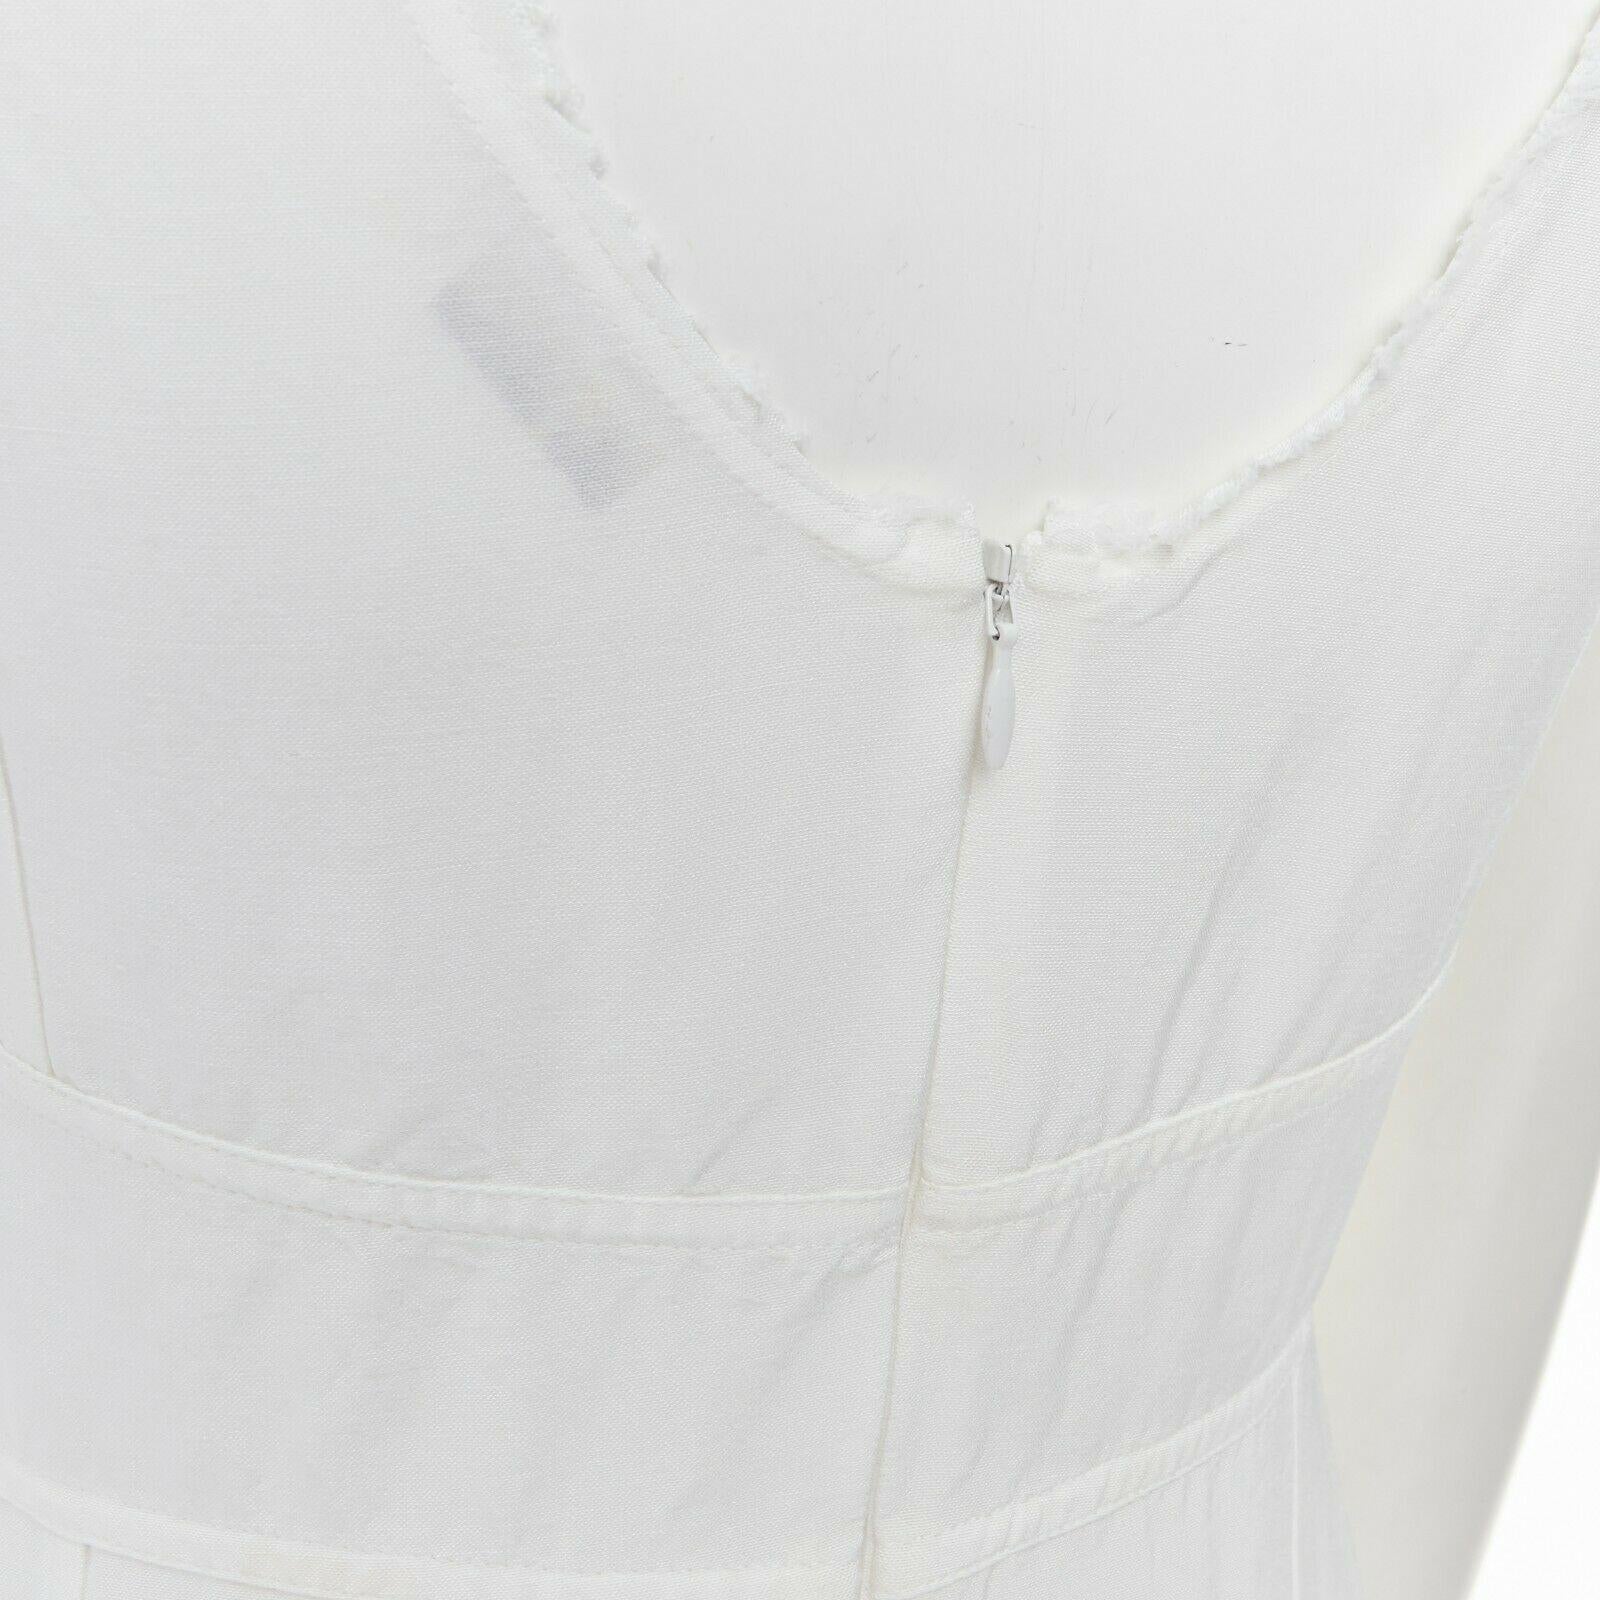 runway CELINE PHOEBE PHILO SS17 Yves Klein body print white frayed dress FR36 S 3